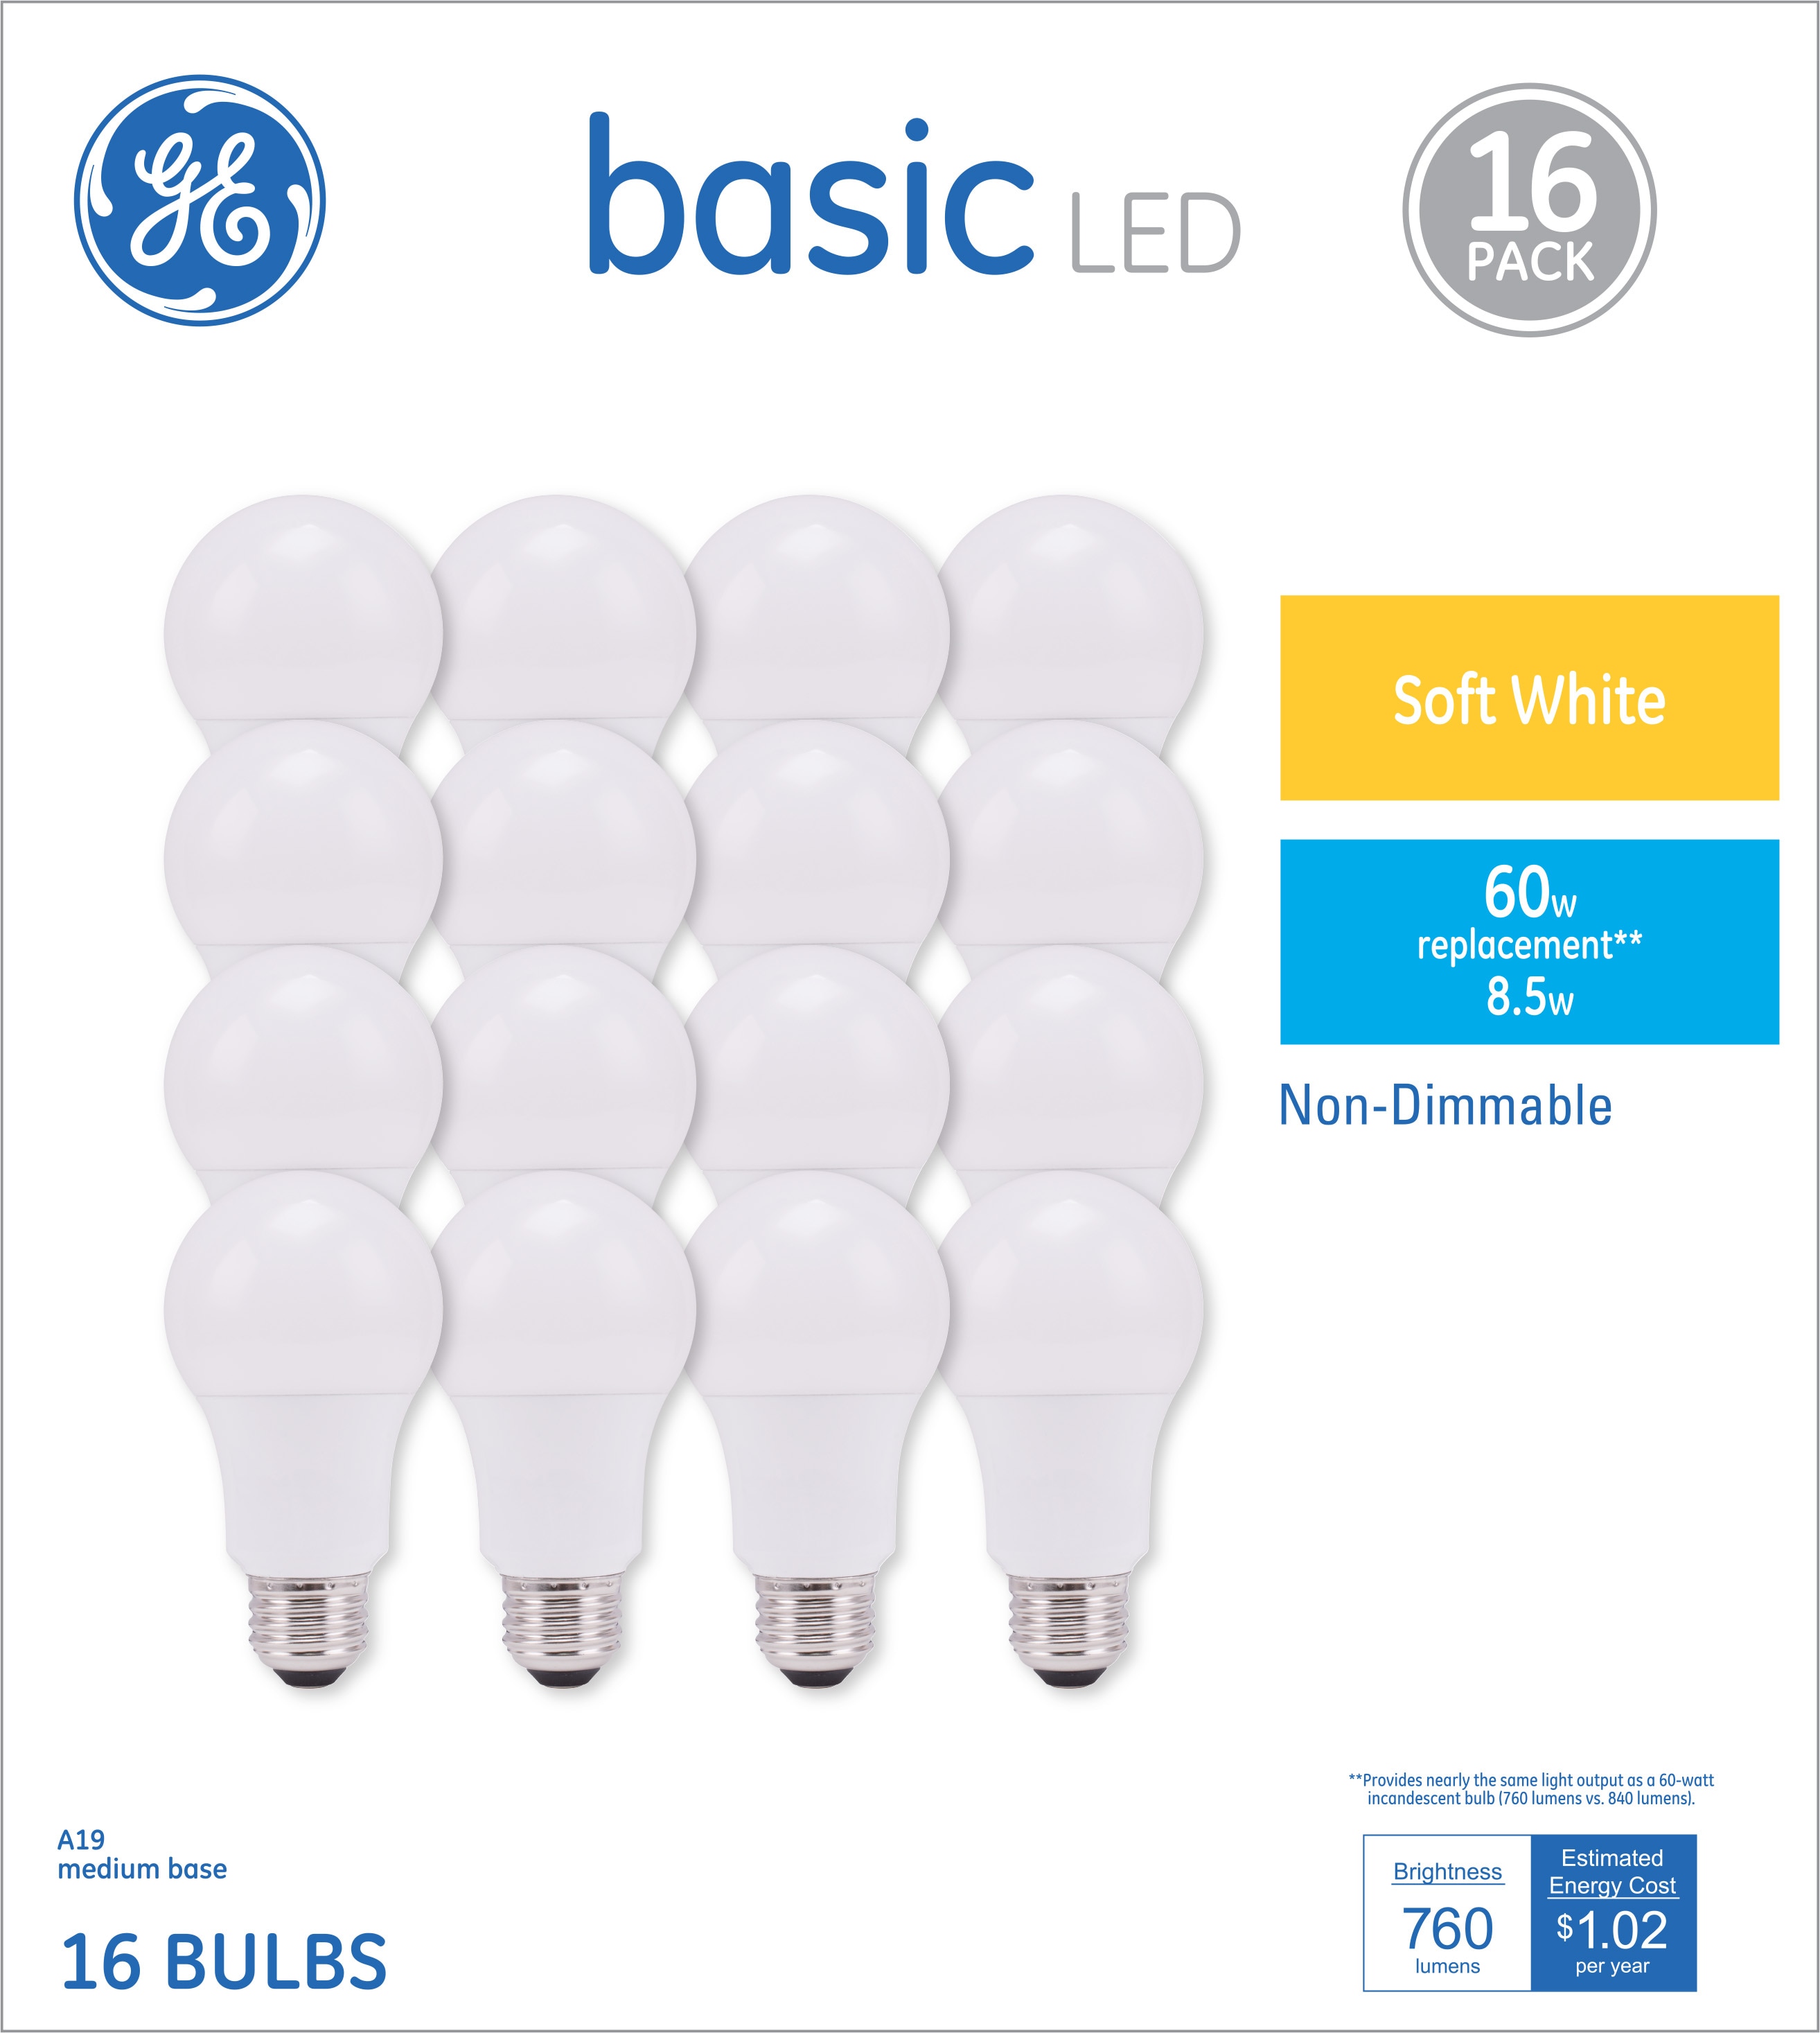 16 GE Basic 60-Watt A19 Soft White LED Light Bulb 16 BULBS use 10 watts Dimmable 